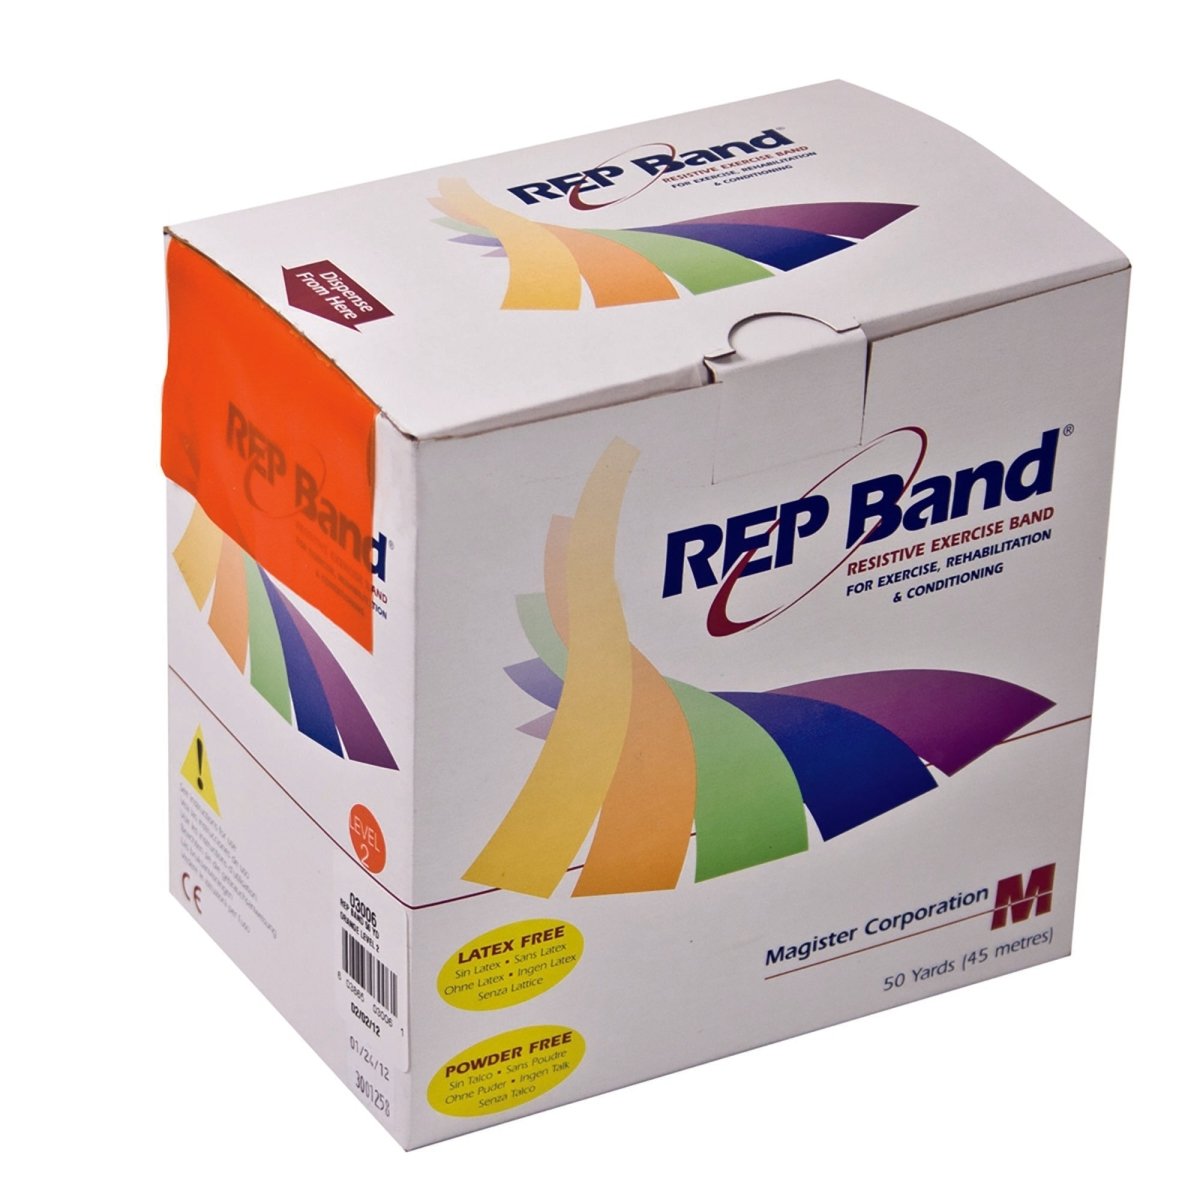 REP Band Exercise Resistance Band, Orange, 4 Inch x 50 Yard - 560504_EA - 1